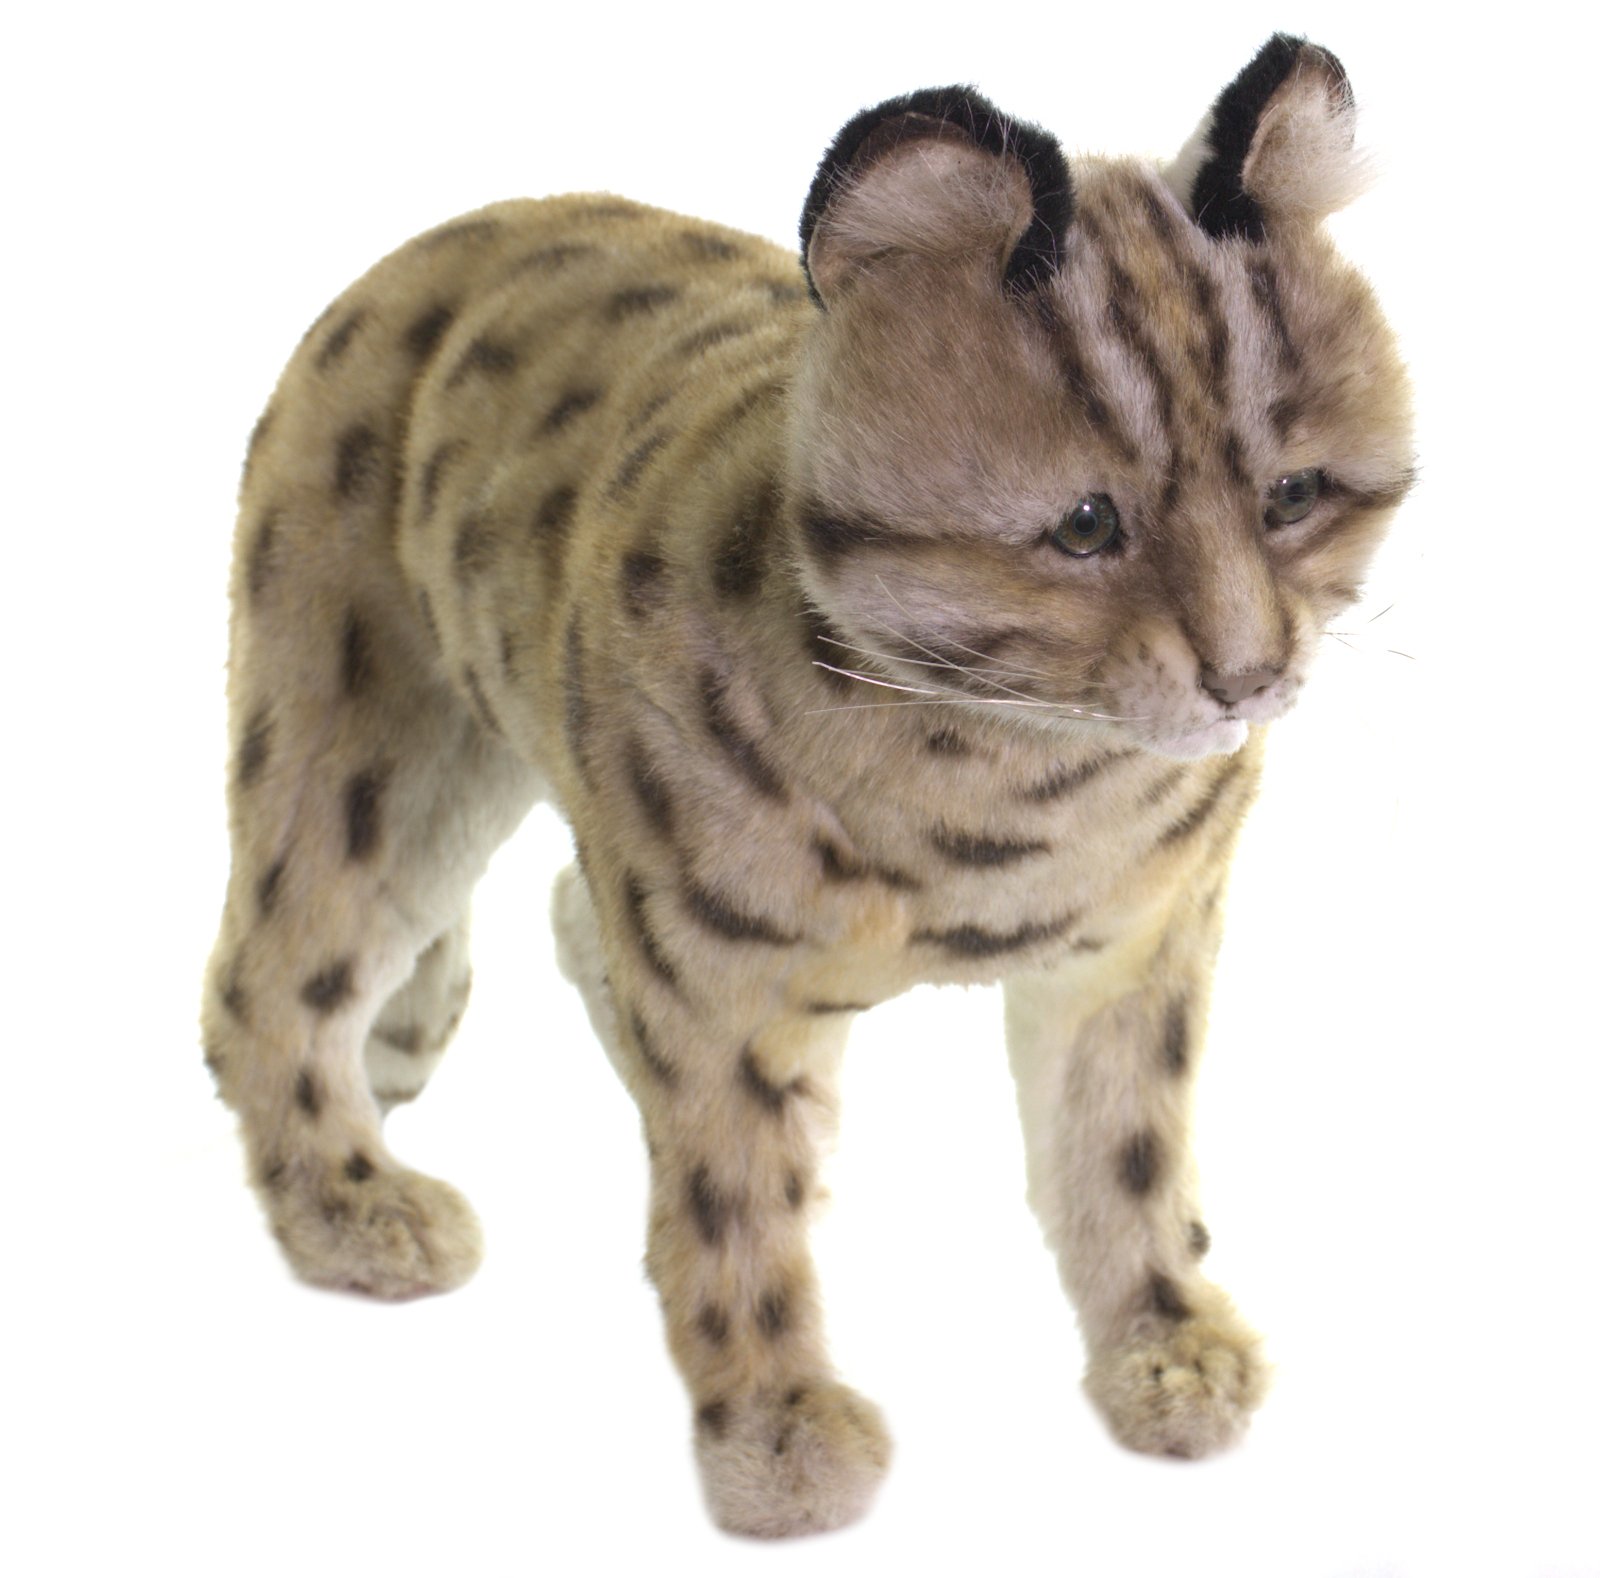 Hansa Leopard Cat Shihu Cub 7739 Soft Toy Sold by Lincrafts Established 1993. 